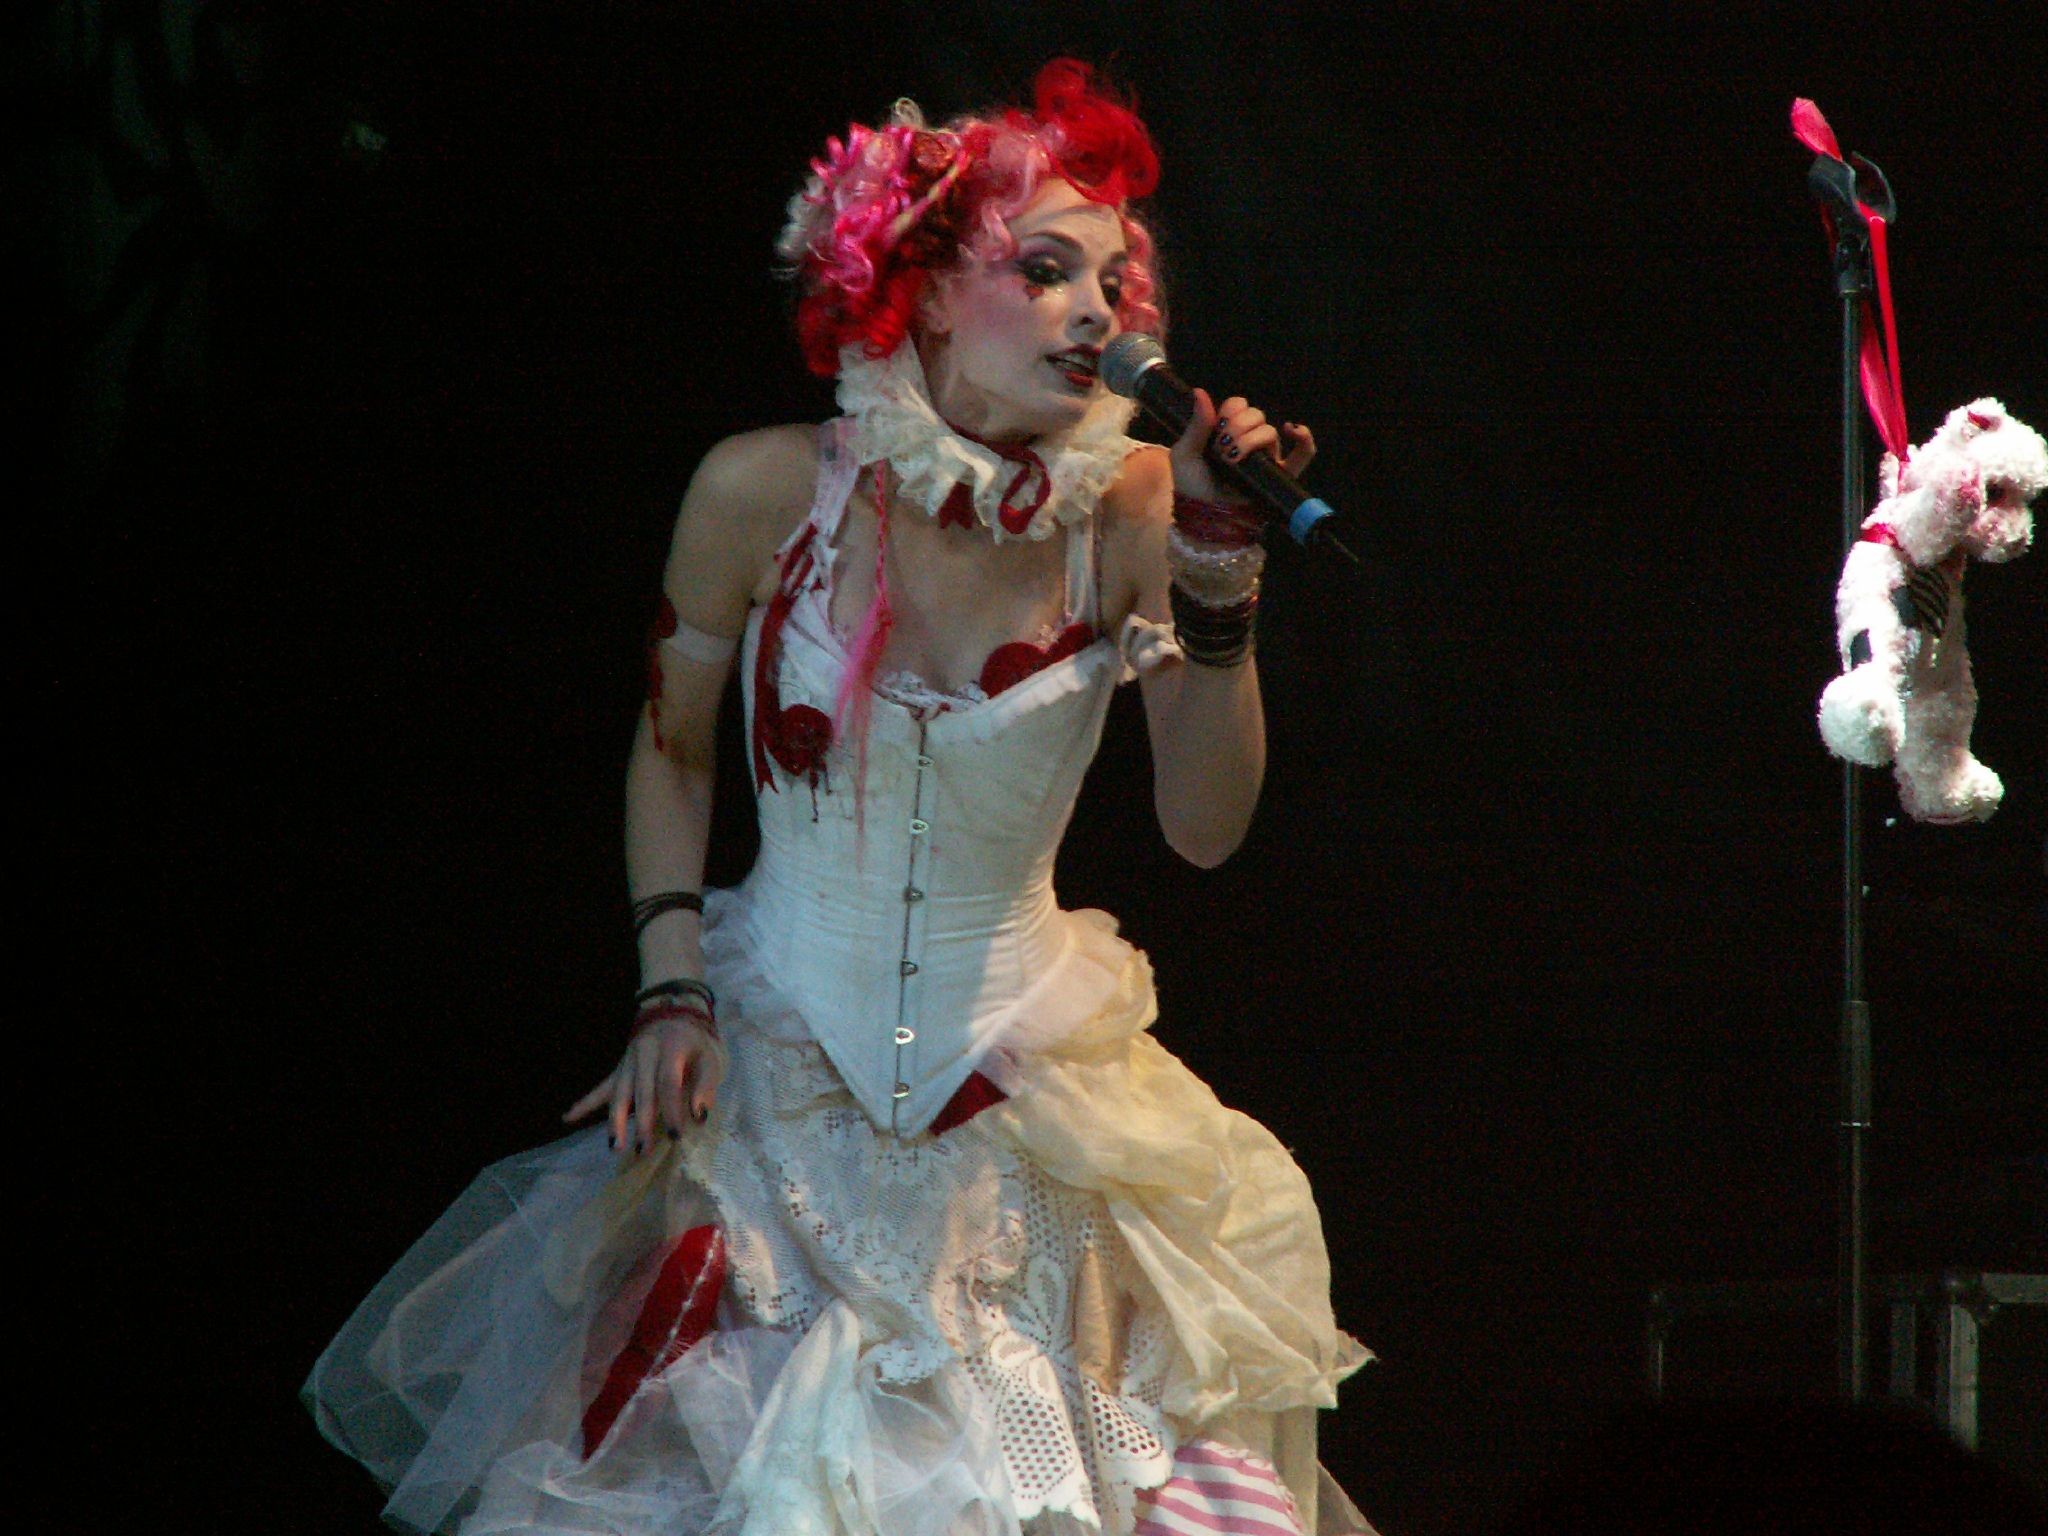 2048x1536 Datei:Emilie Autumn at M'era Luna 2007.jpg